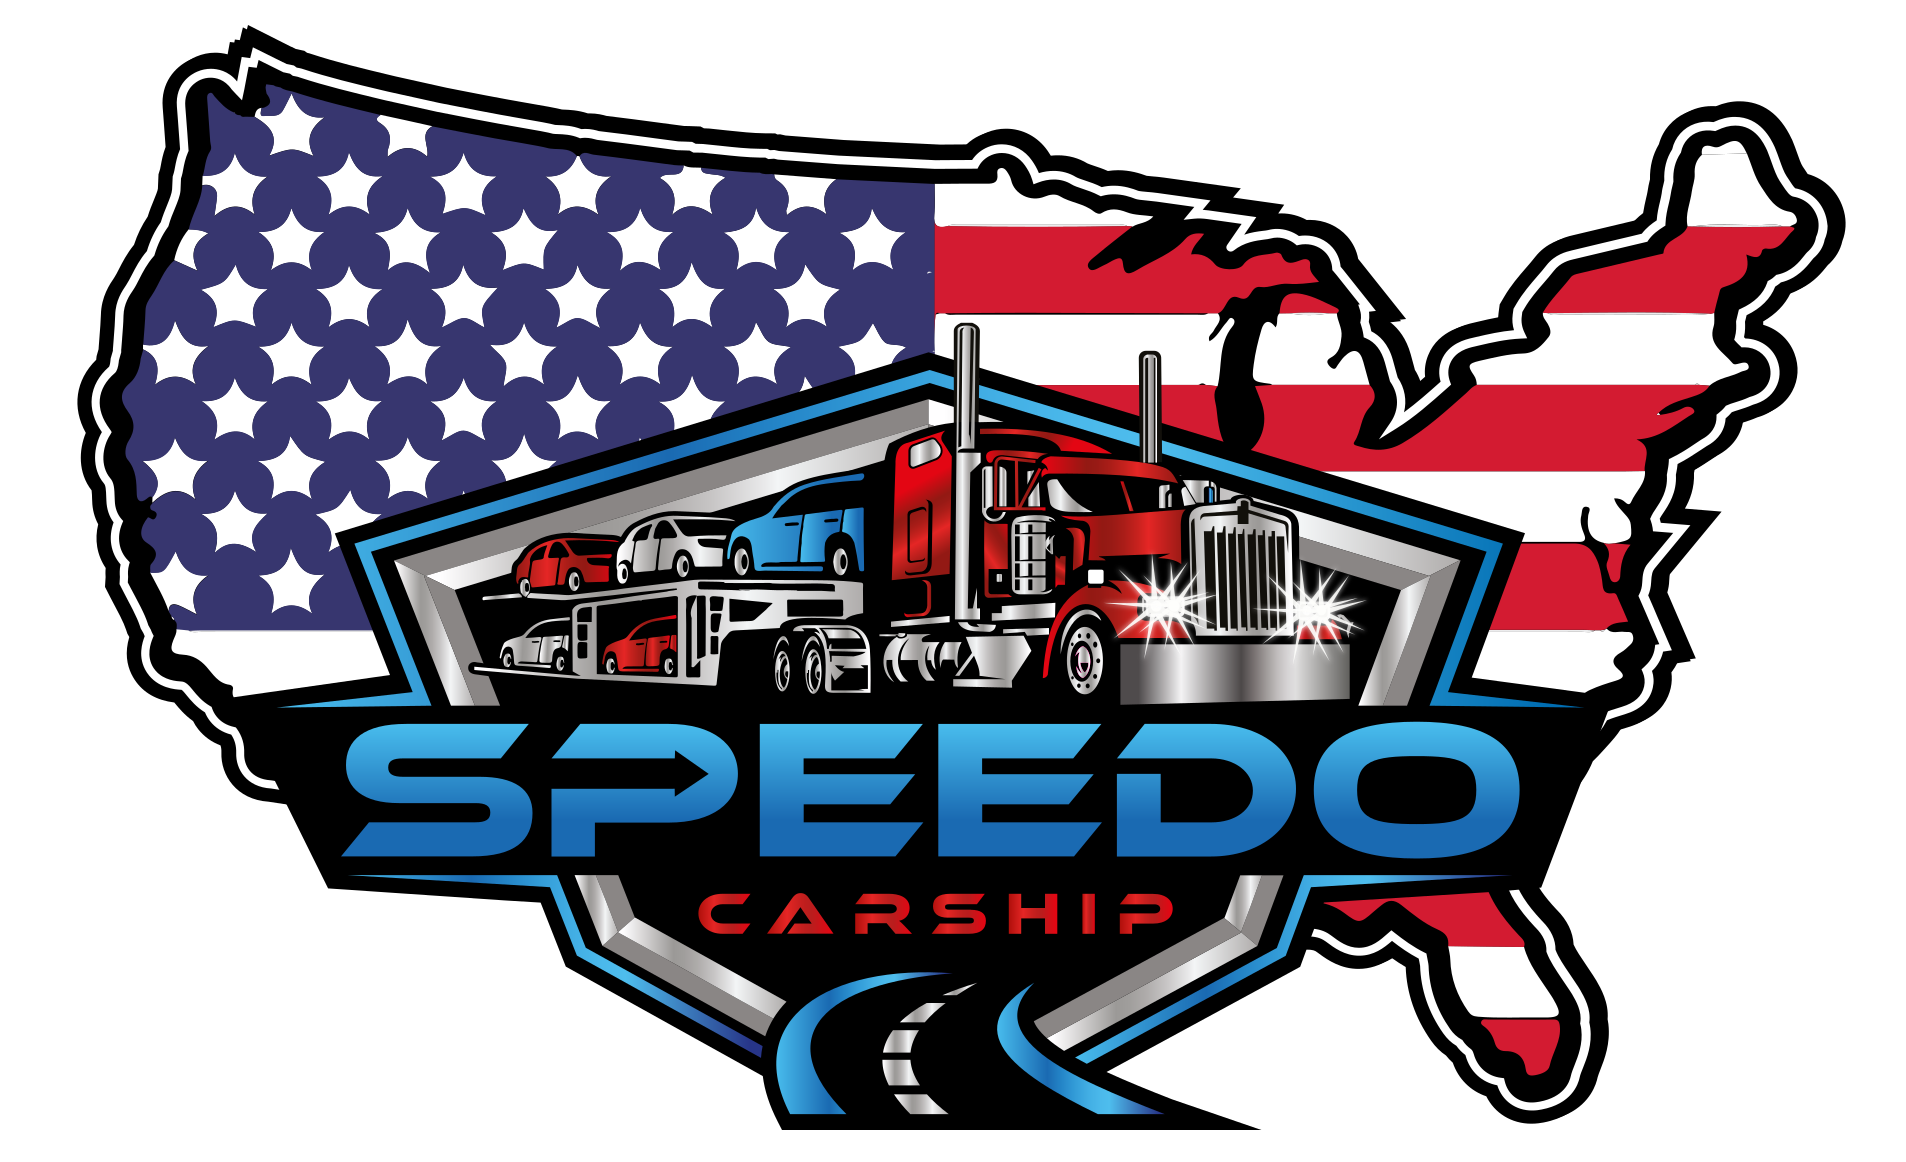 Useful Information - Speedo Carship LLC